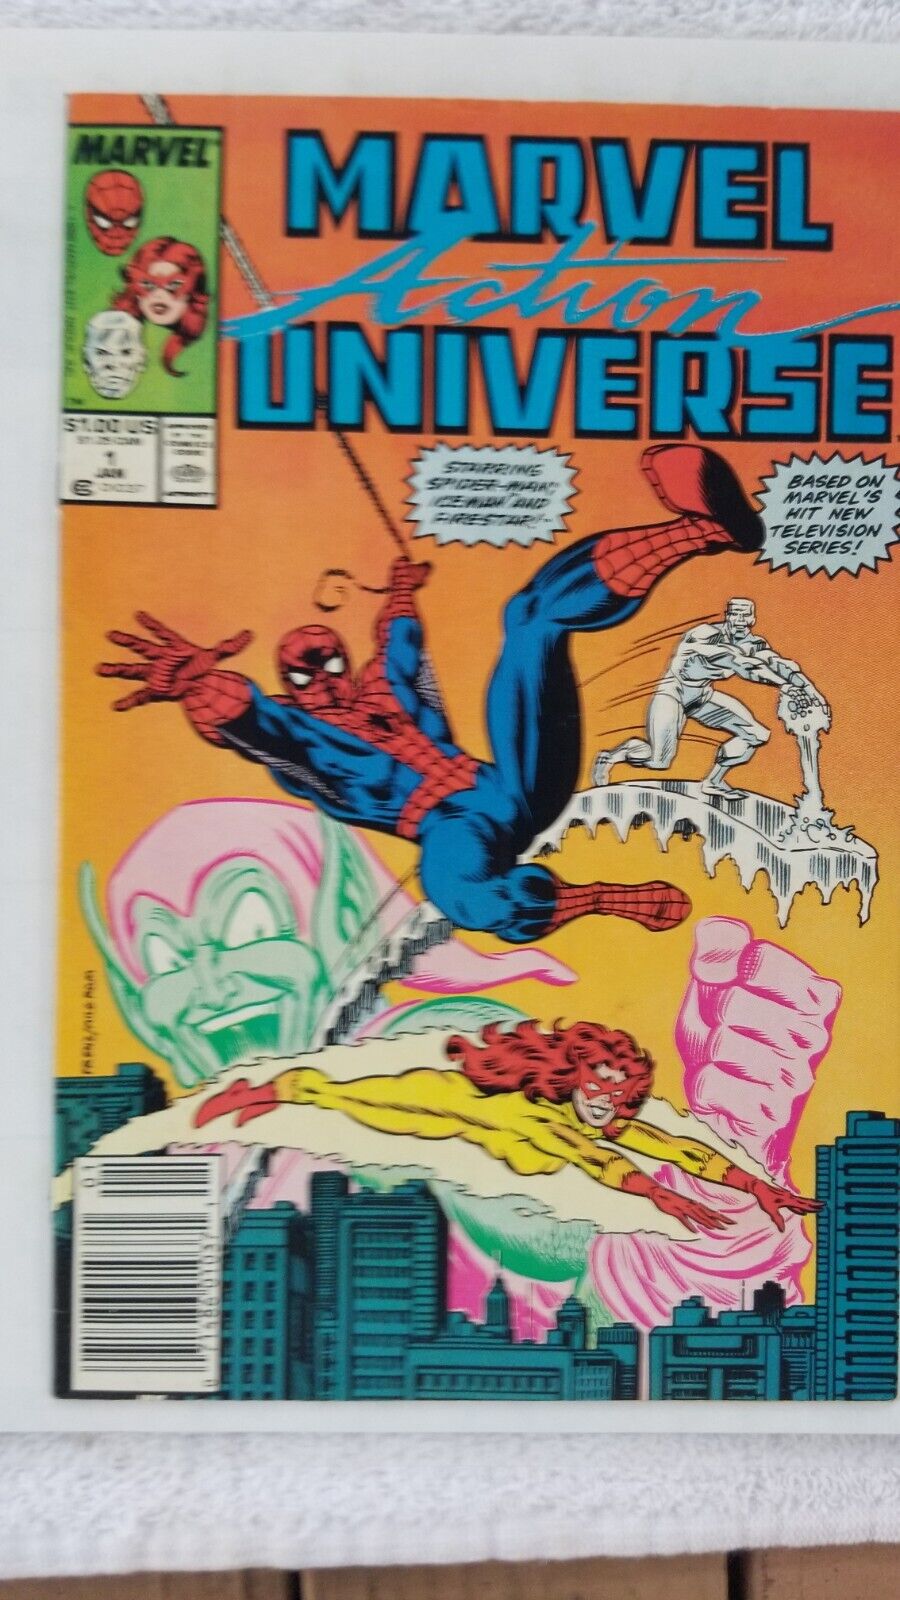 Marvel Action Universe #1 Spider-Man Amazing Friends Firestar Iceman (Marvel)